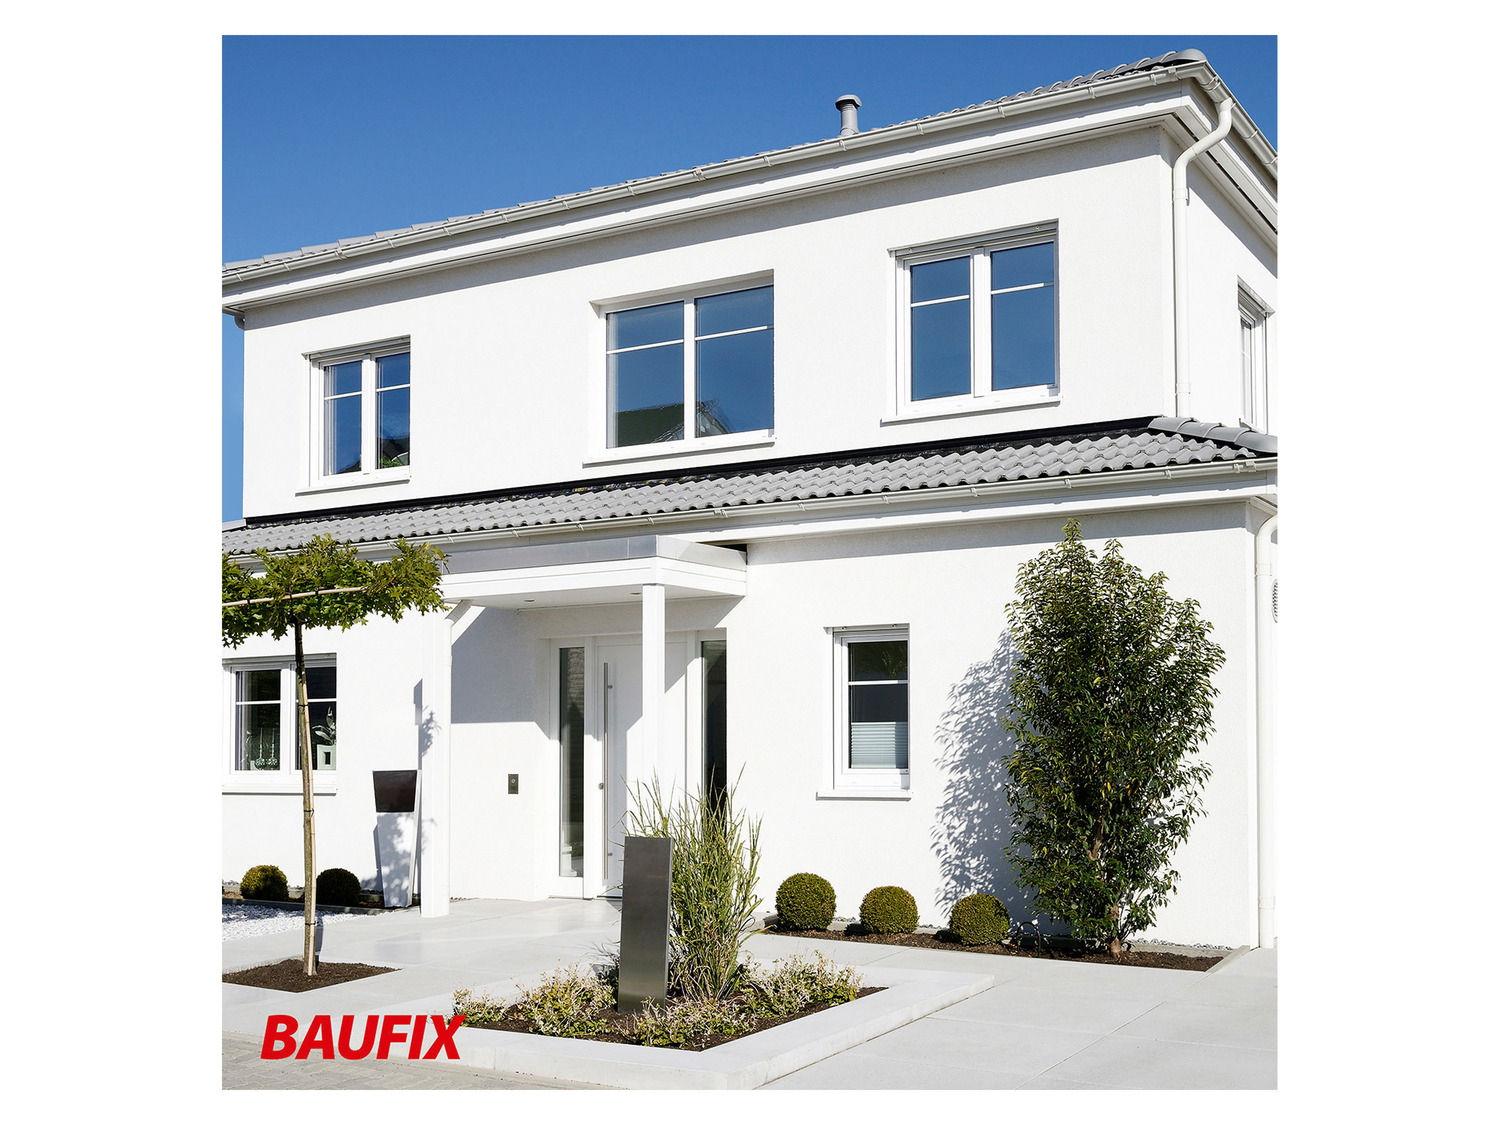 BAUFIX professional Fassadenfarbe Liter | 10 LIDL Plus